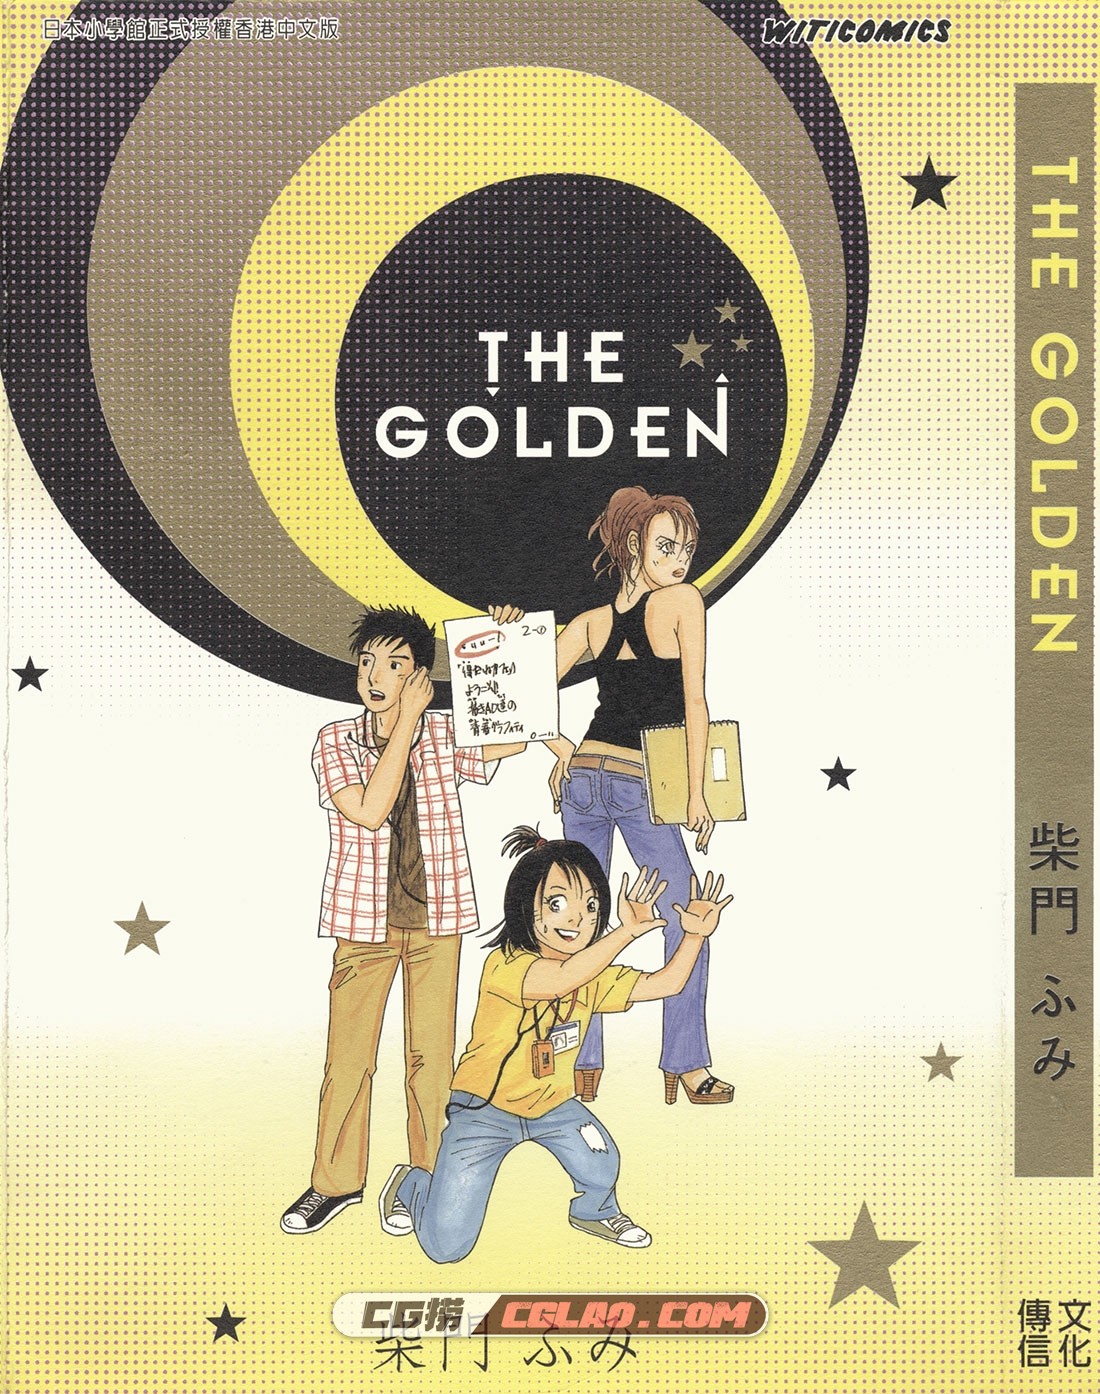 THE GOLDEN 柴门文 全一册 青年职场恋爱漫画网盘下载,GOLDEN_0000.jpg